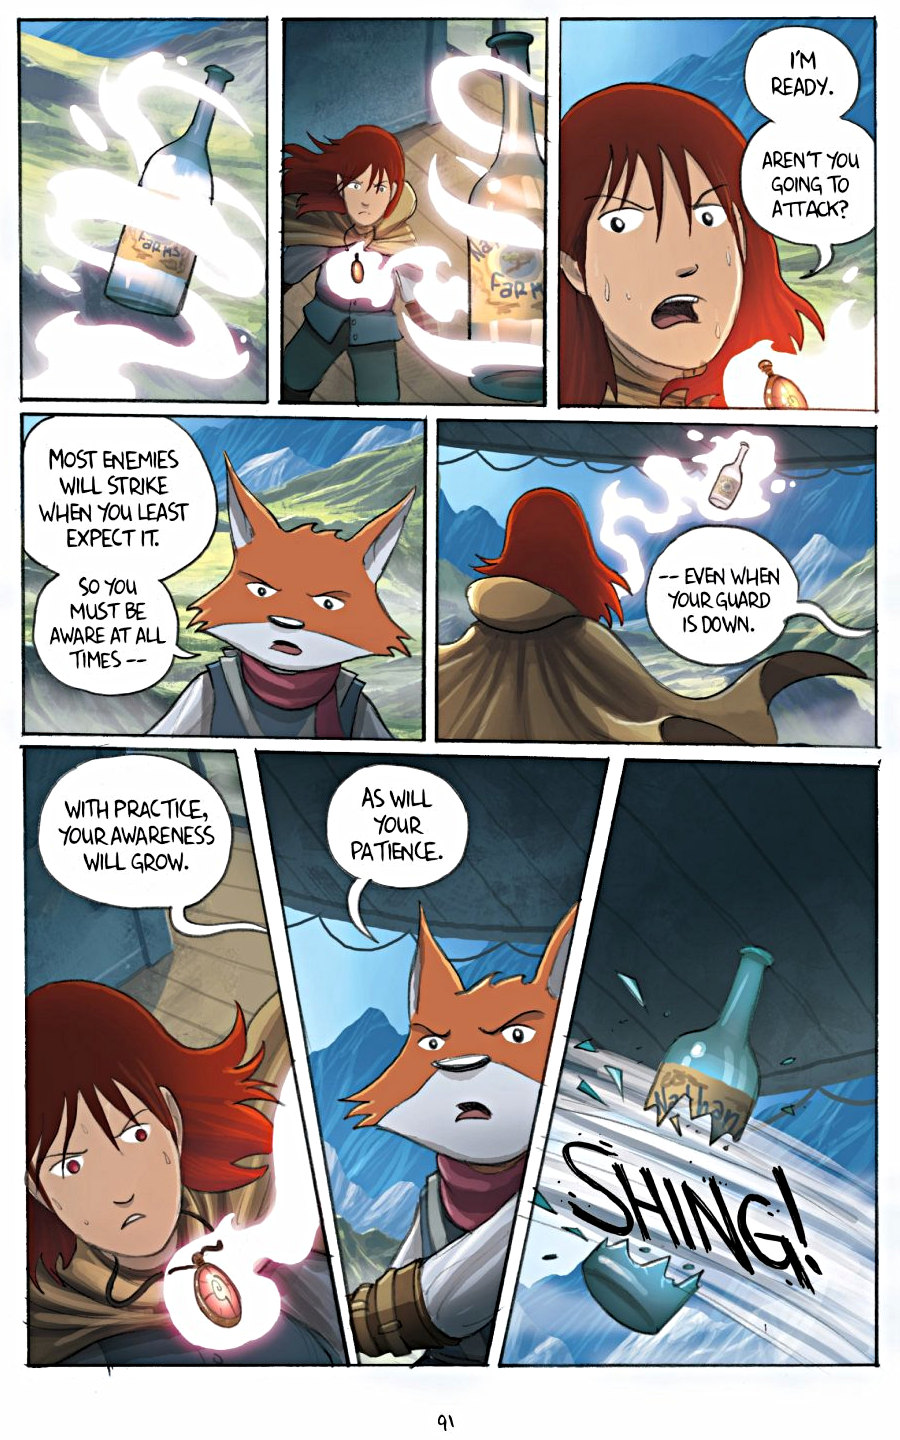 page 91 of amulet 3 cloud searchers graphic novel by kazu kibuishi